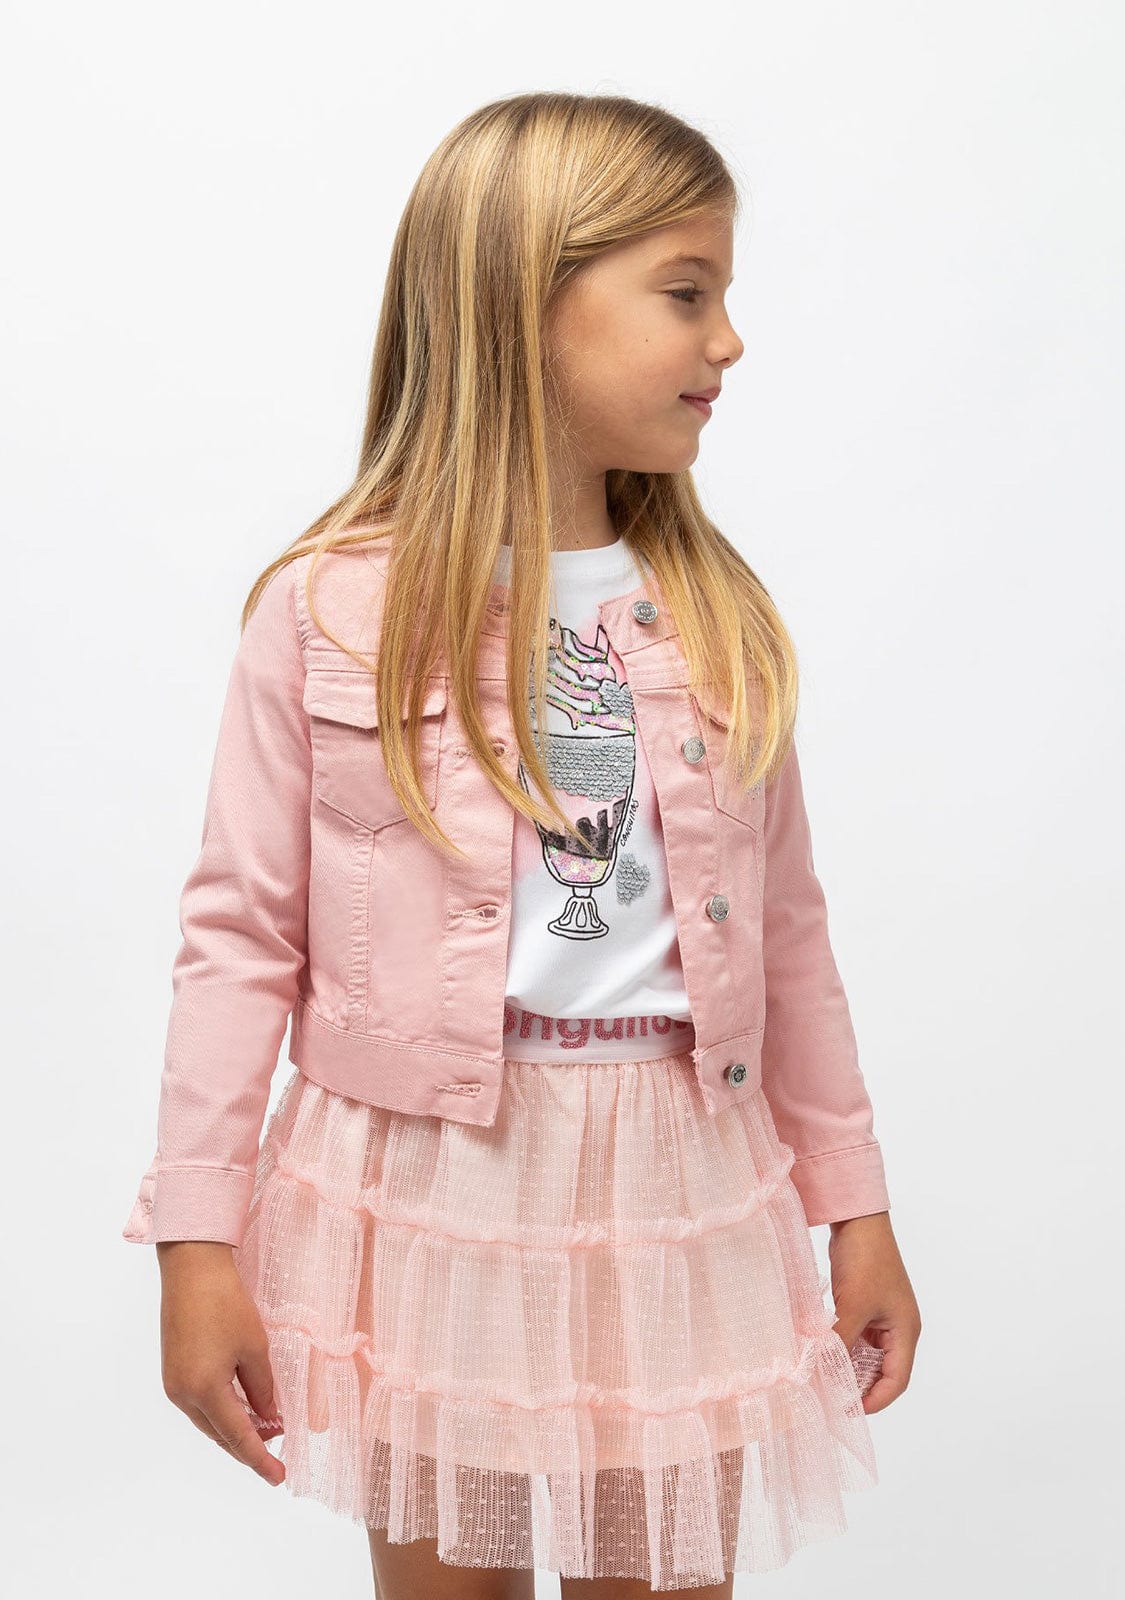 CONGUITOS TEXTIL Clothing Girl's Light Pink Jacket